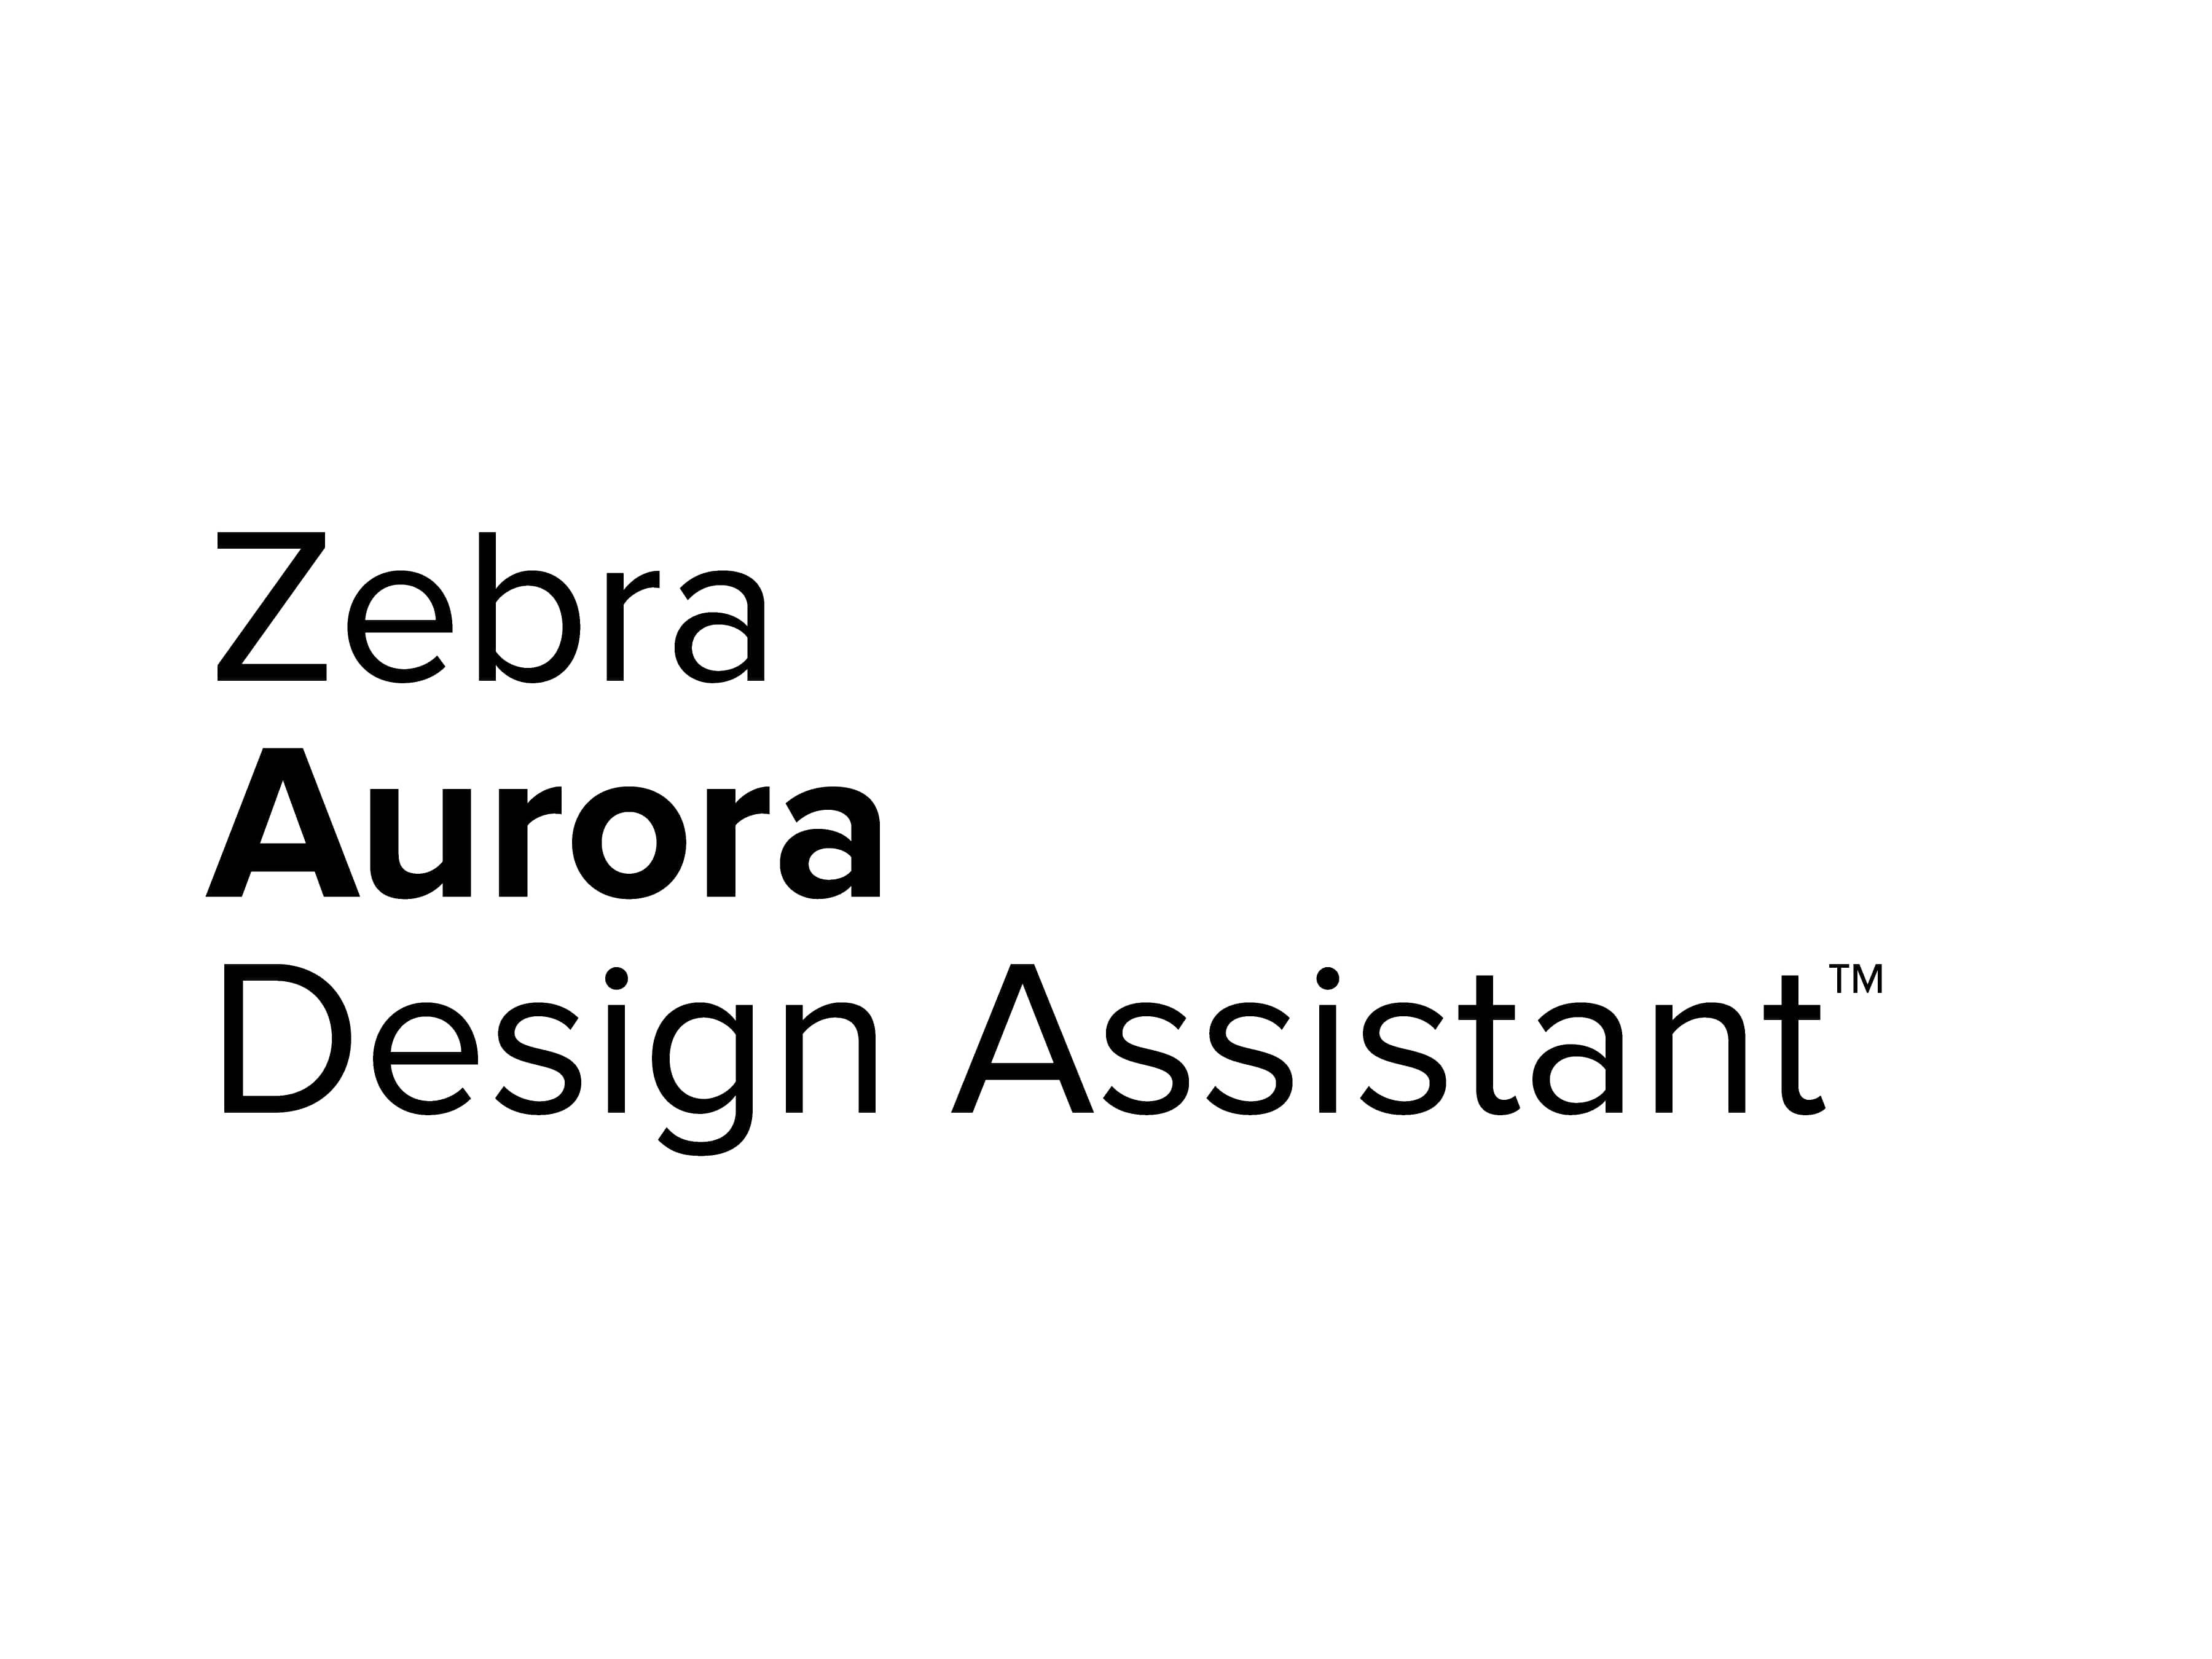 Zebra Aurora Design Assistant